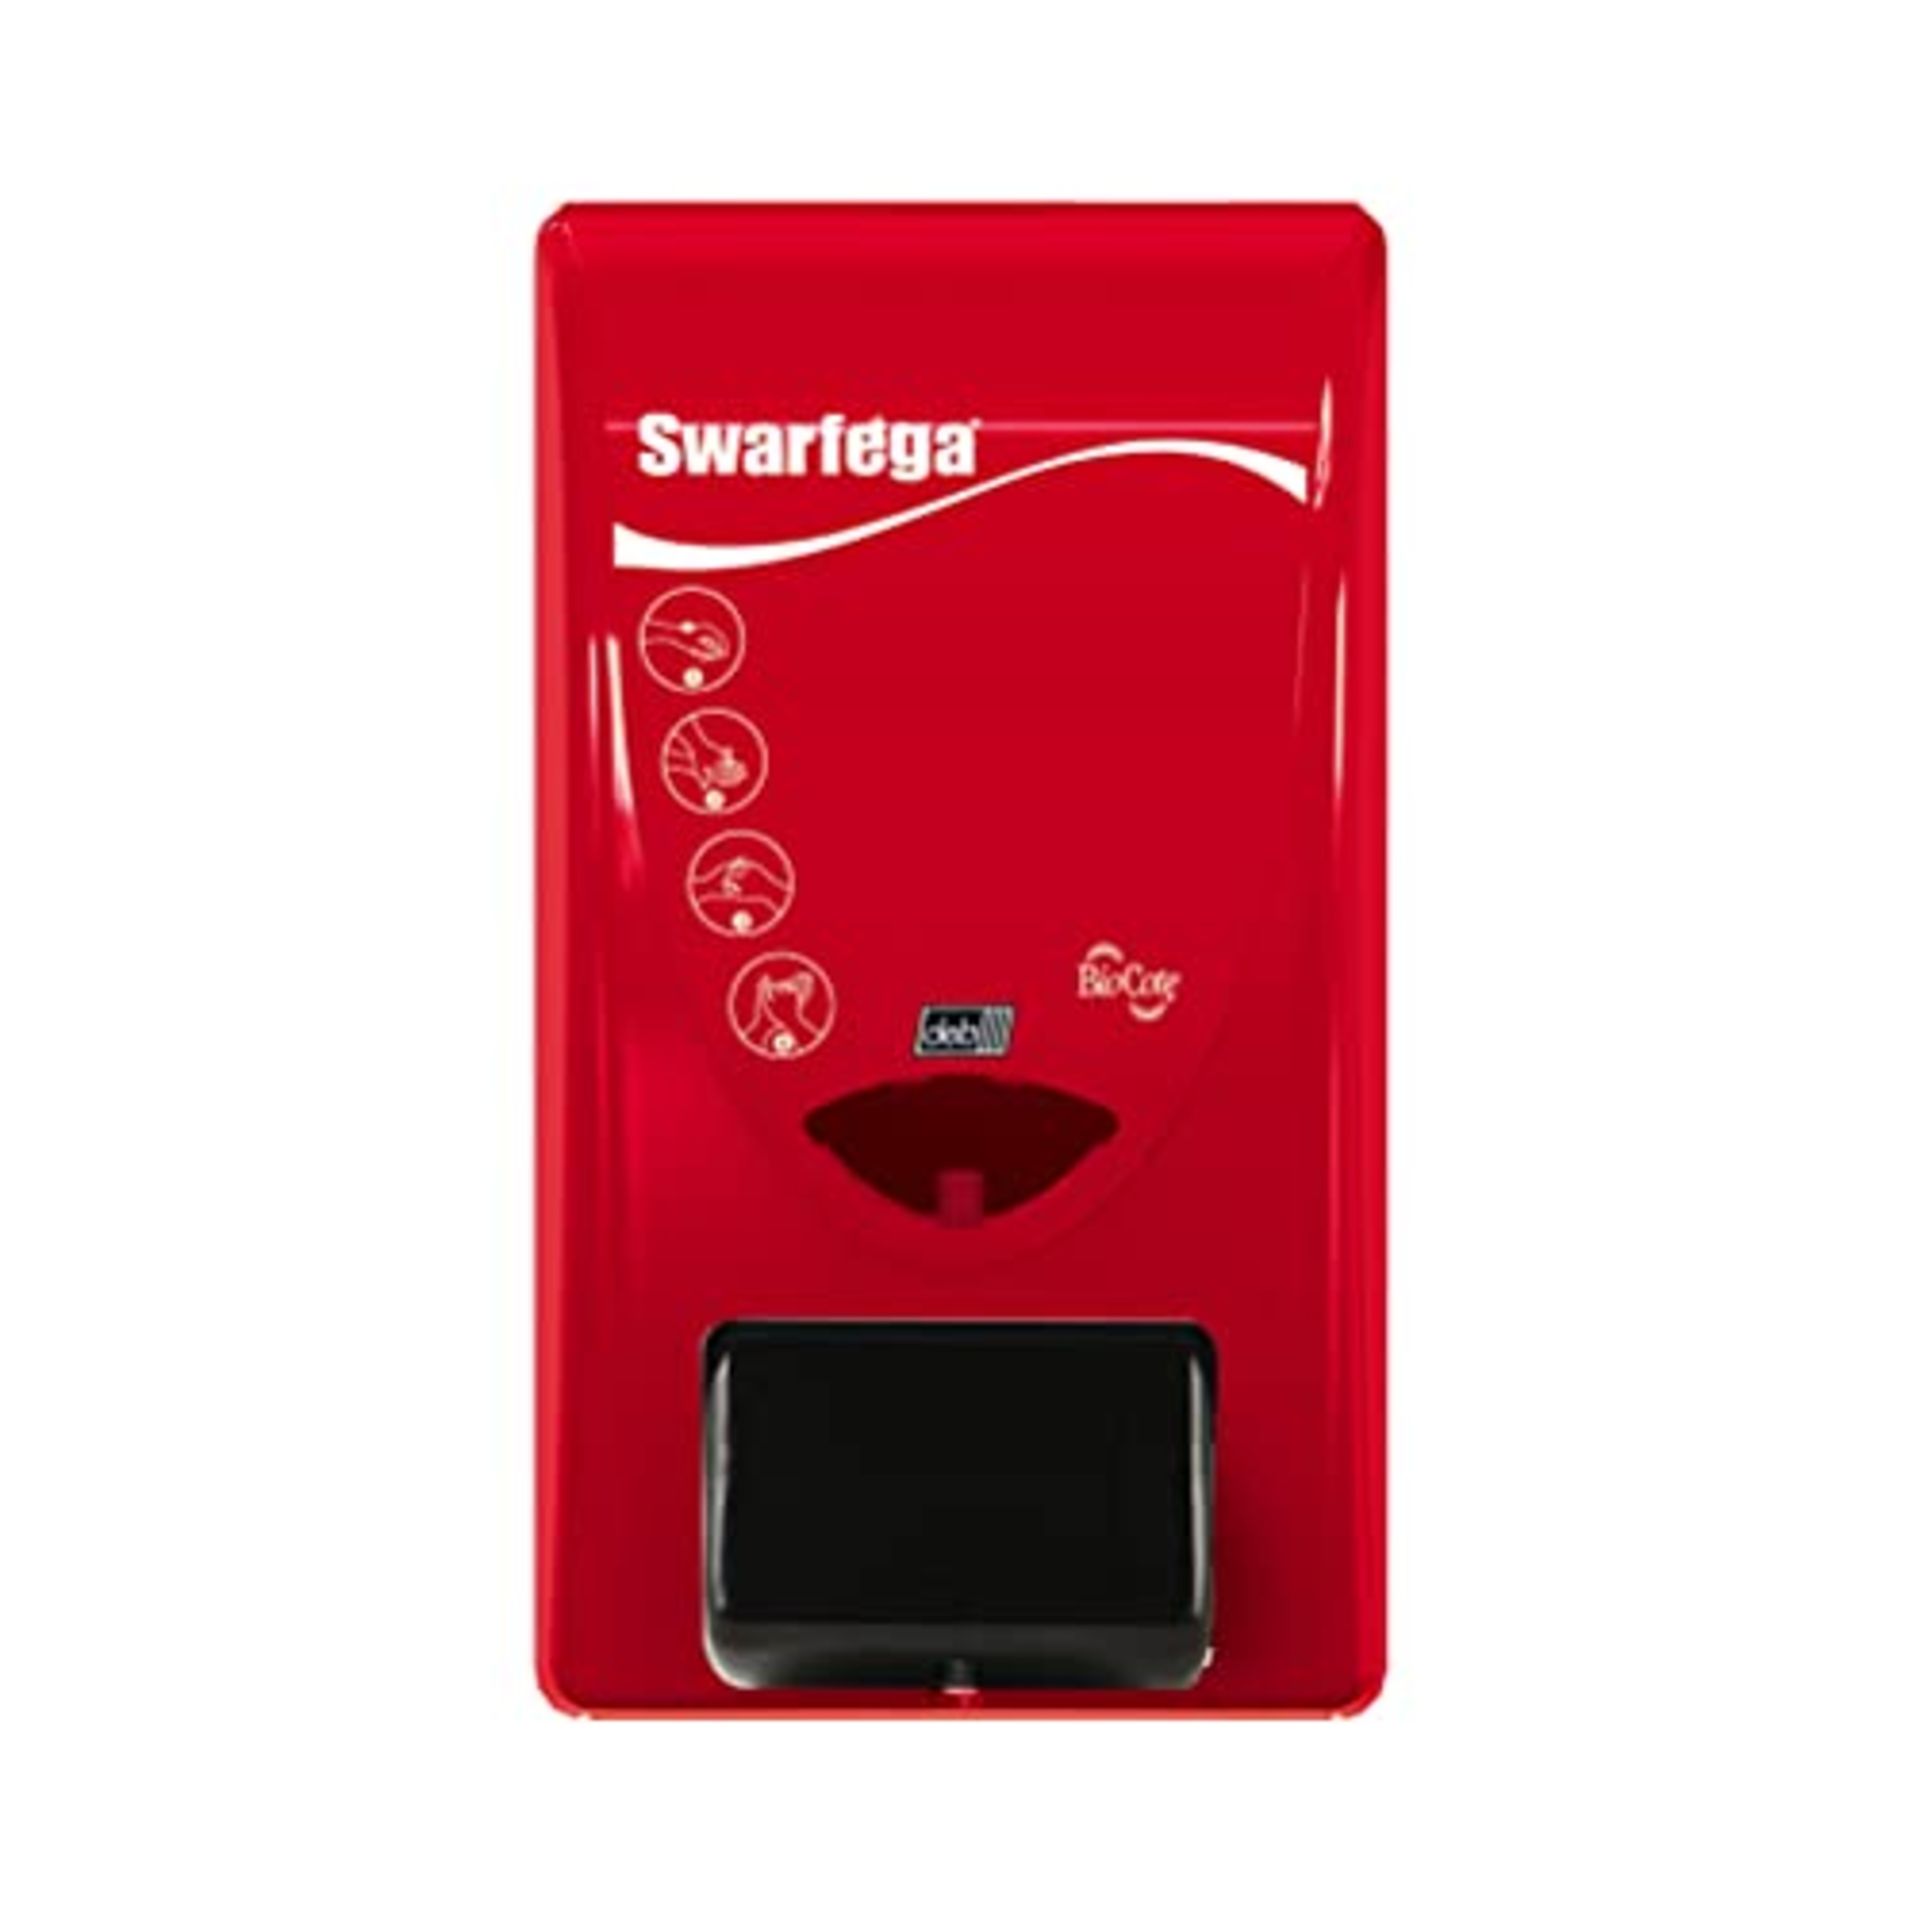 Swarfega Hand Wash Dispenser 4L, Hand Soap Dispenser for use with 4 Litre Swarfega Han